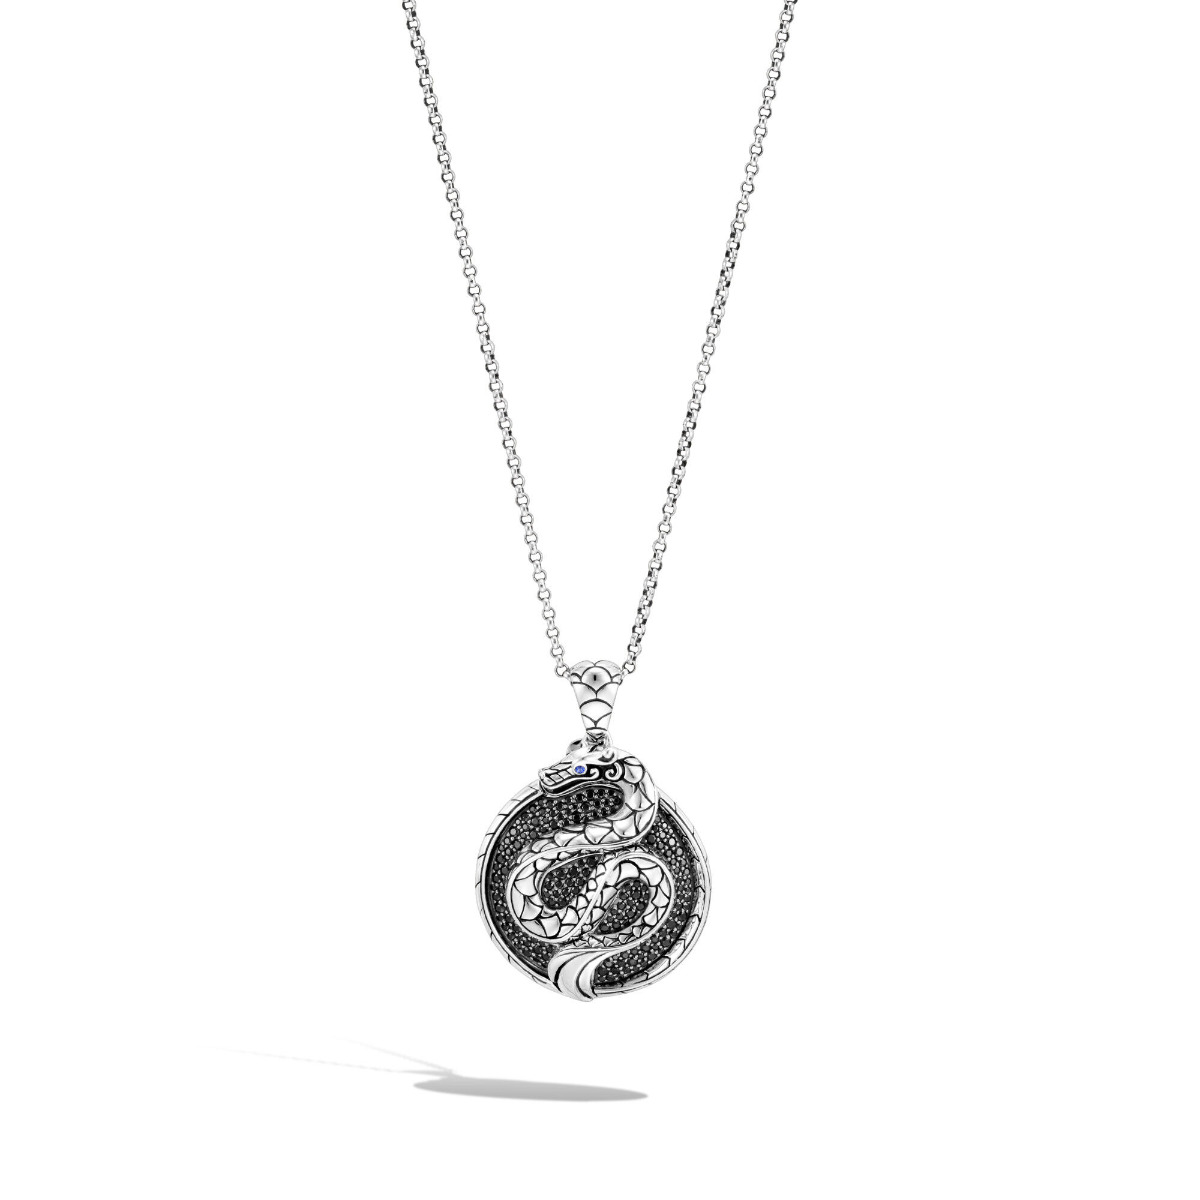 John Hardy "Legends Naga" Diamond & Sapphire Pendant Necklace